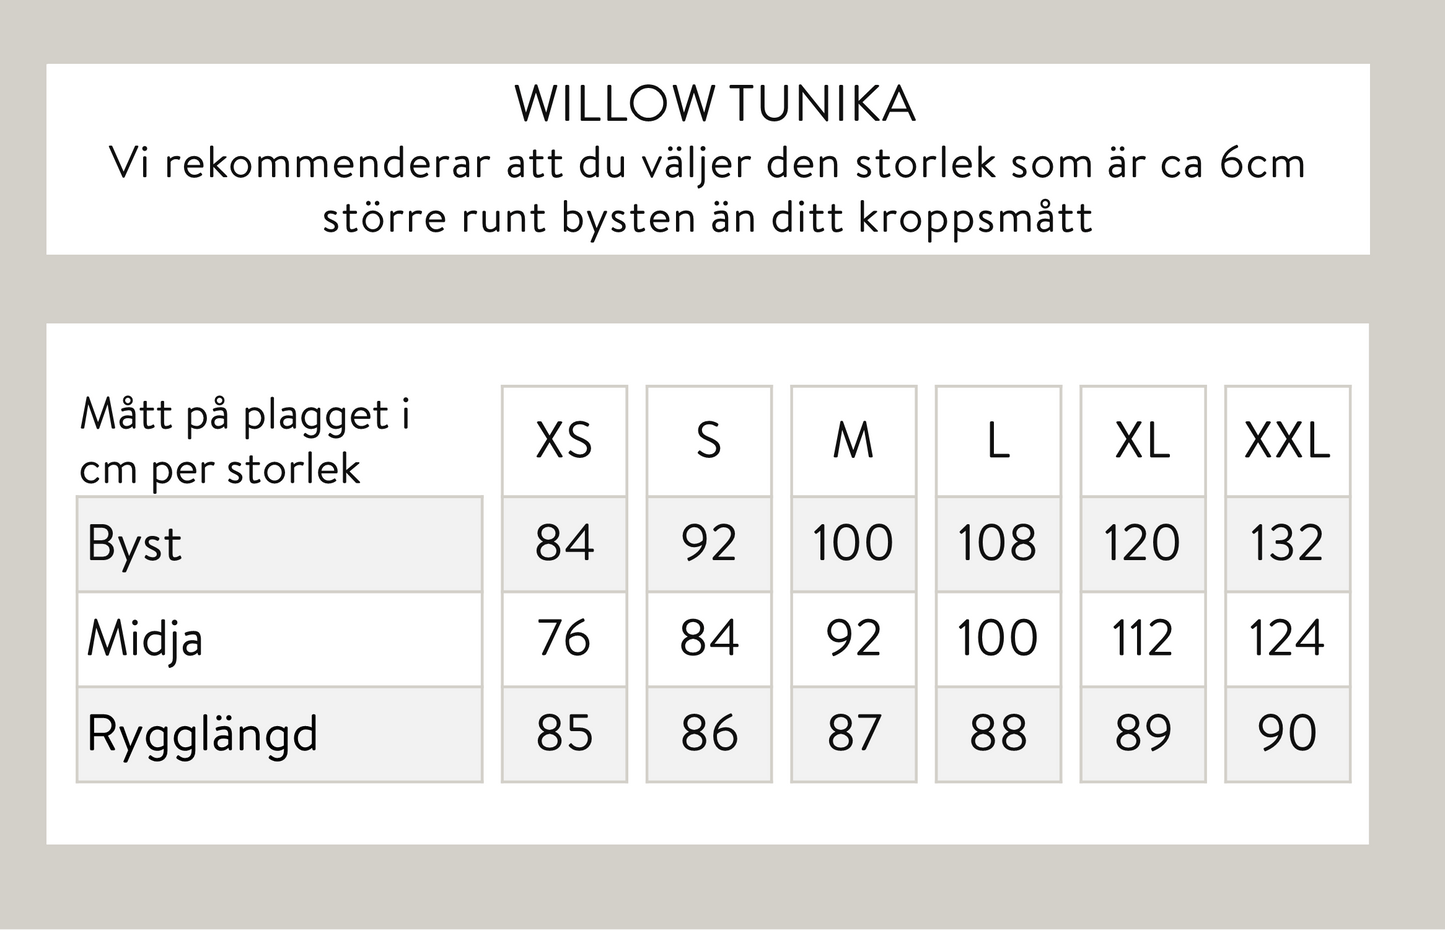 Willow tunika - Svart